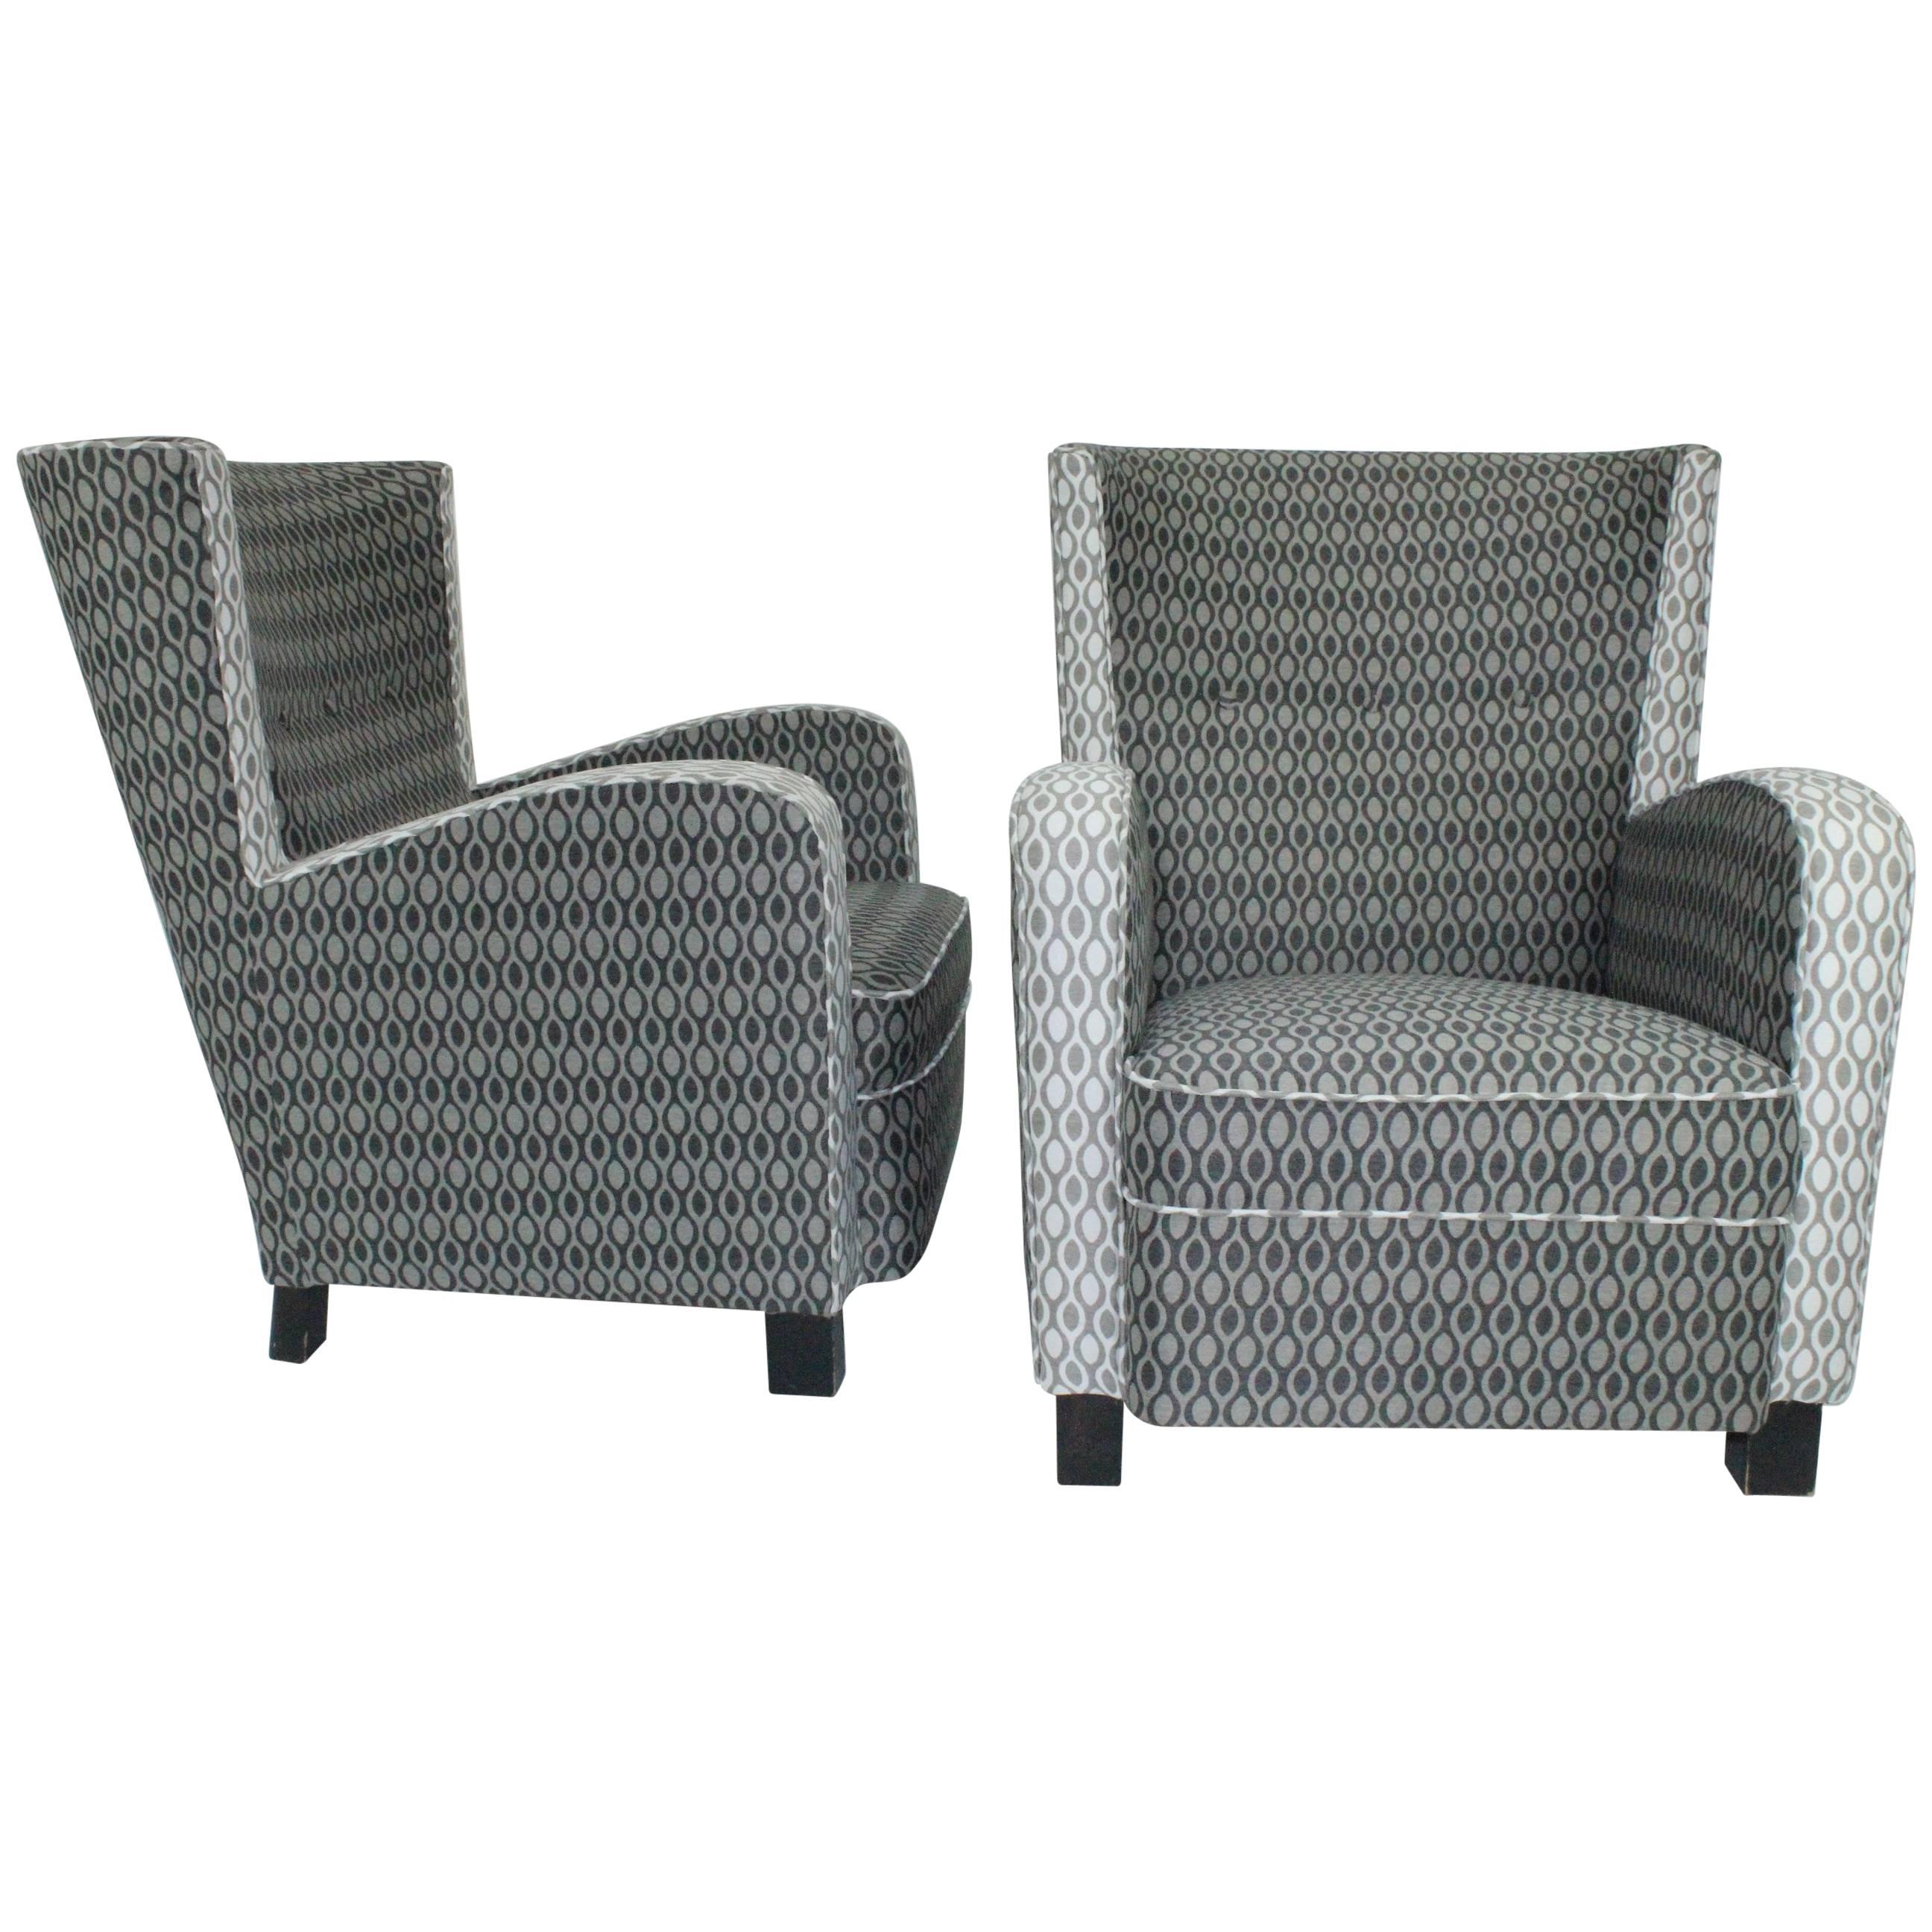 Pair of Swedish 1930s Easy Chairs Attributed to Margareta Köhler for Futurum